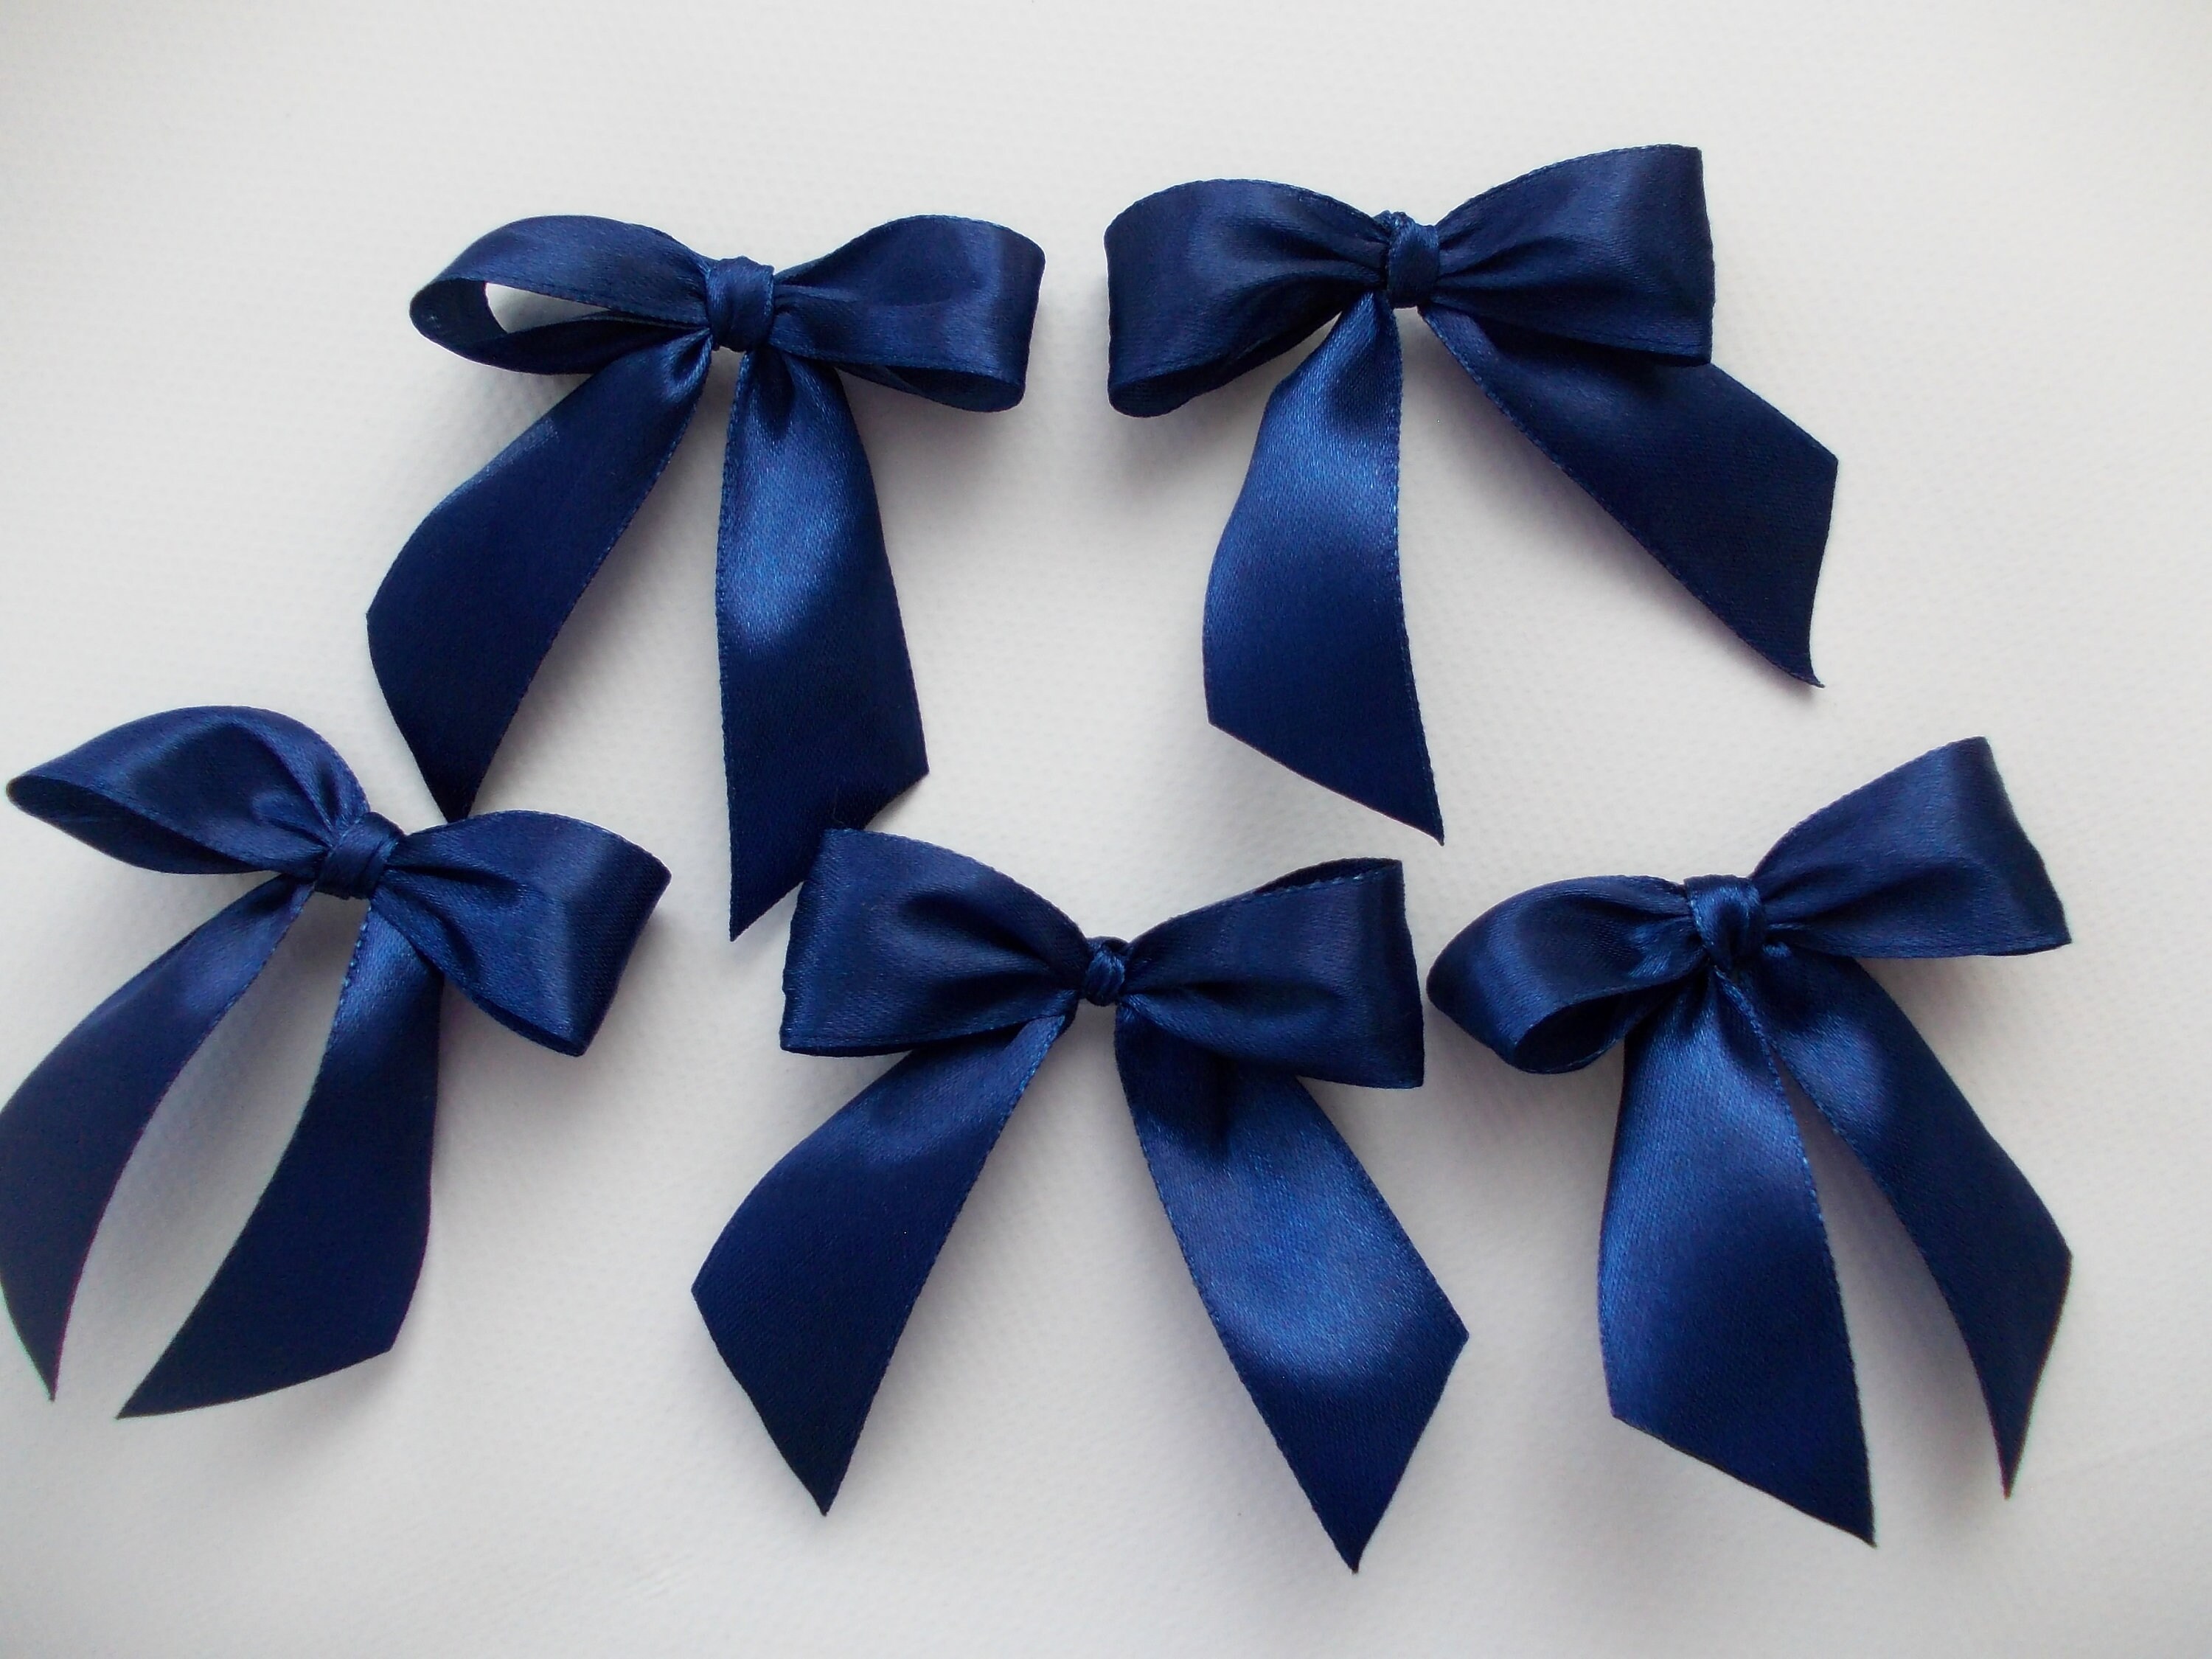 Dark Blue Bow Ribbon Band Satin Navy Stripe Fabric Isolated on